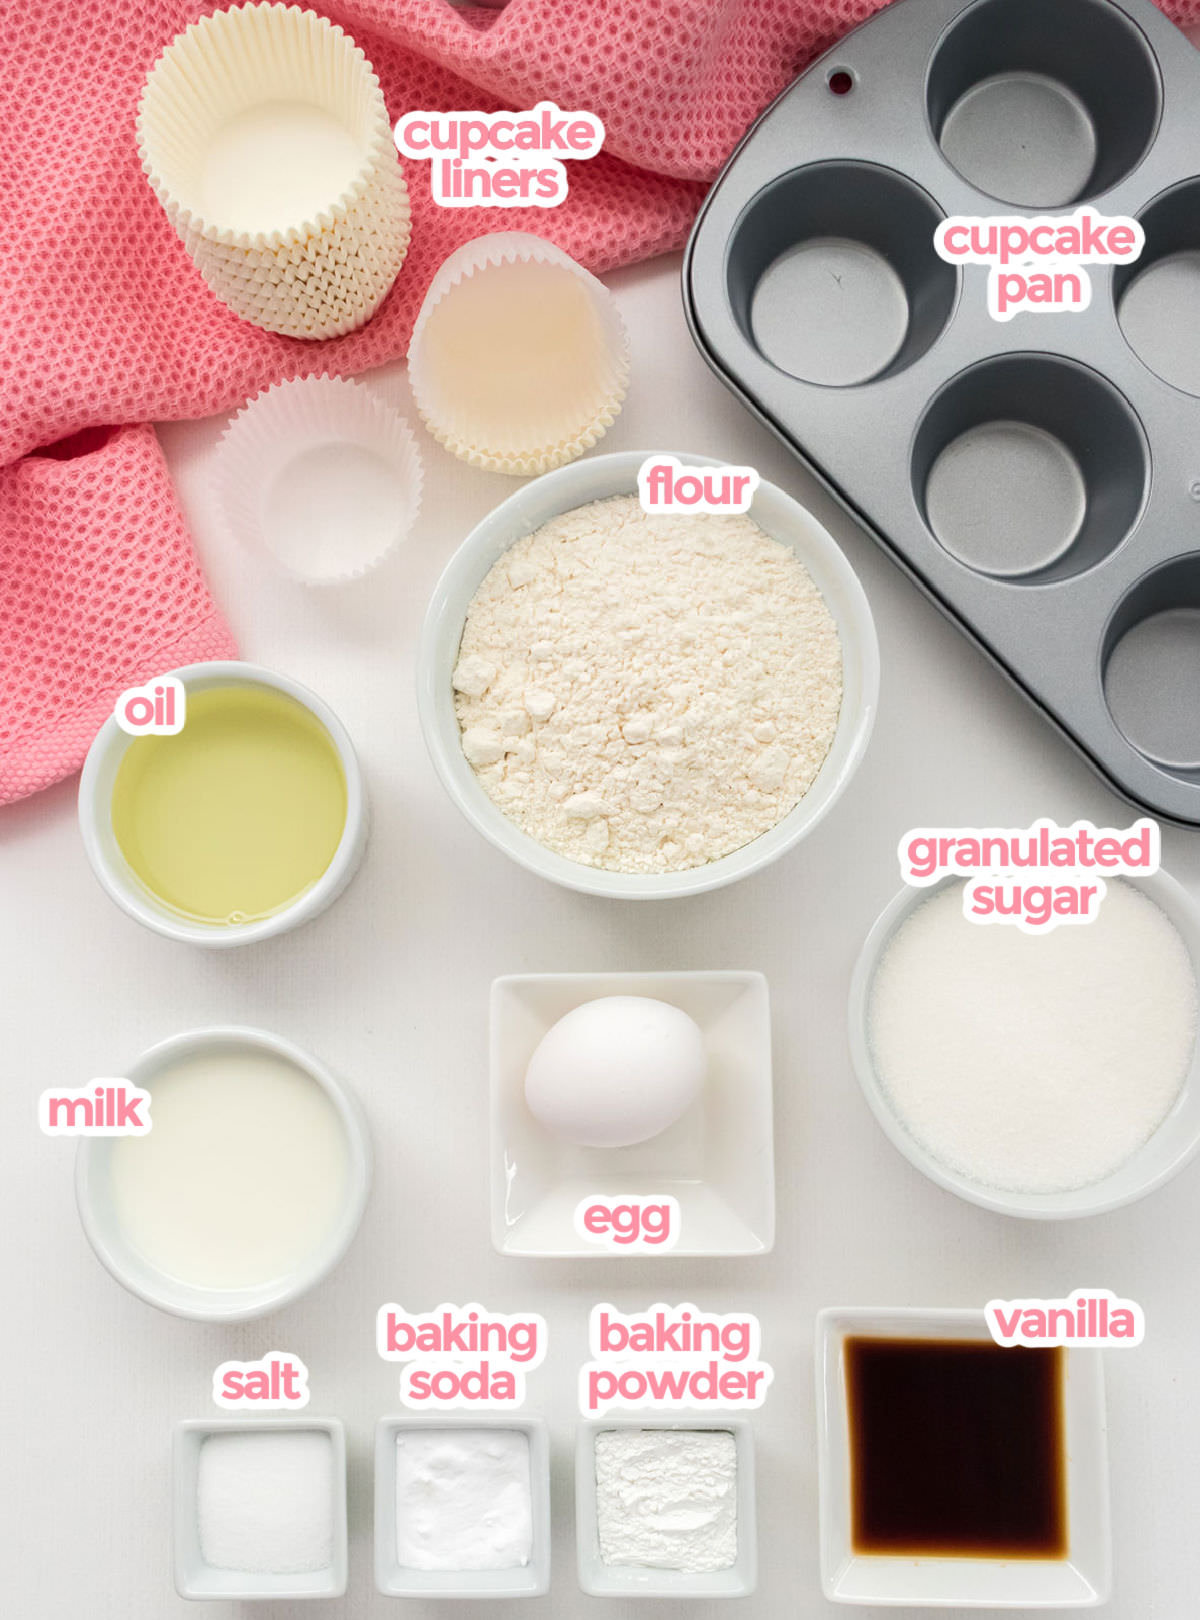 Ingredients needed to make Homemade Vanilla cupcakes including flour, sugar, oil, milk, egg, vanilla, baking powder, baking soda and salt.